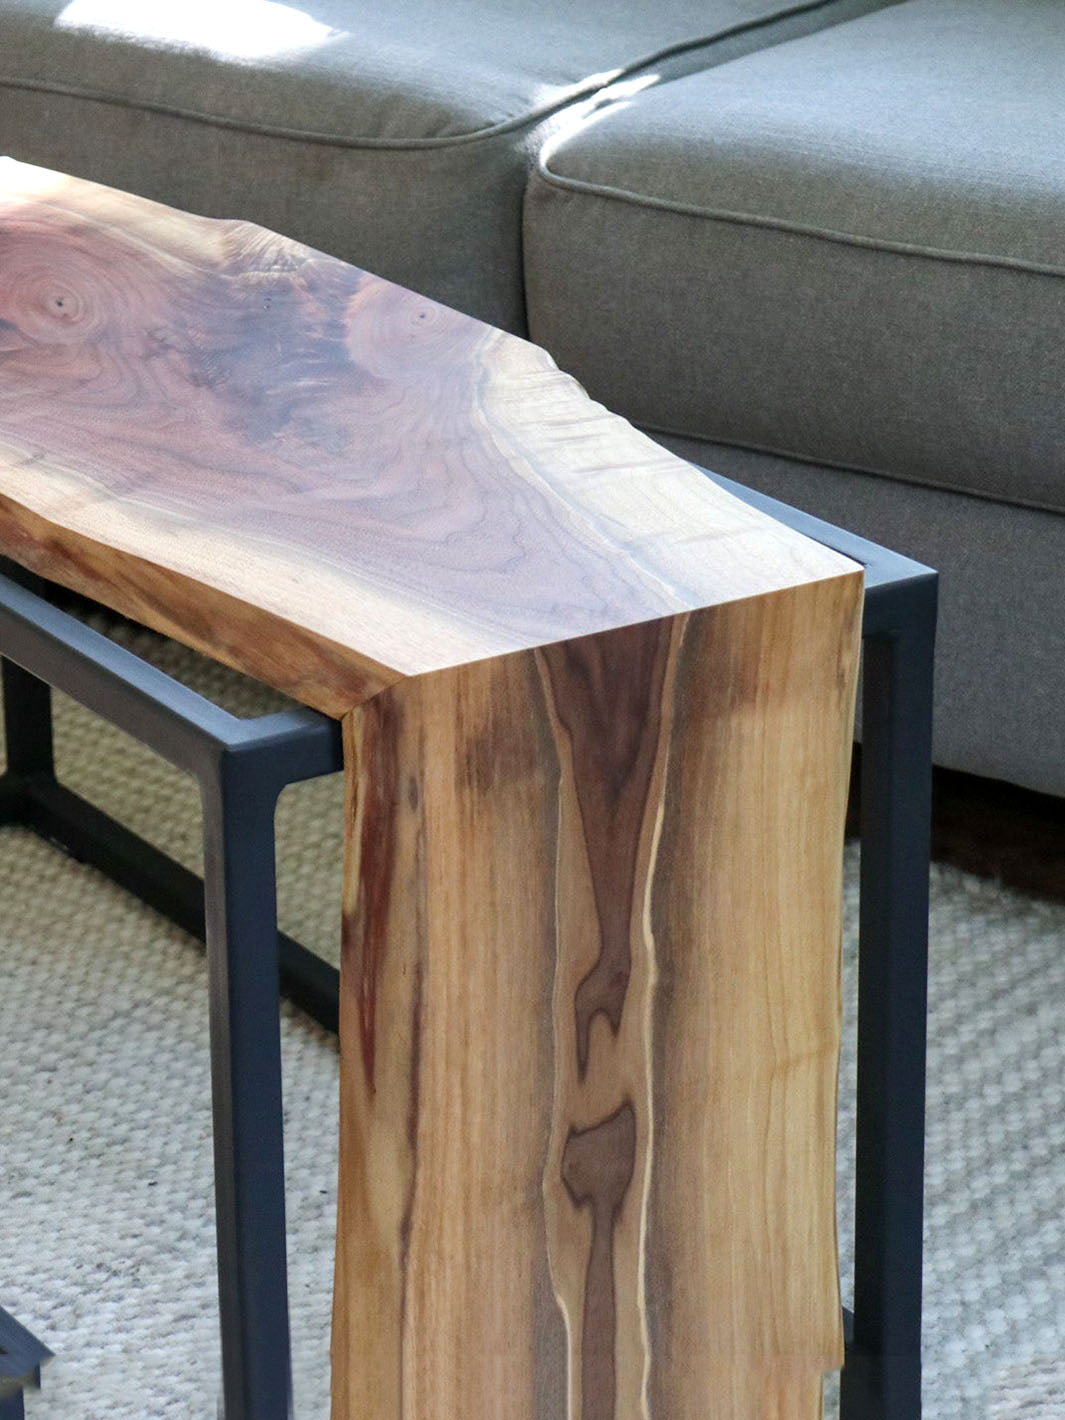 Live-Edge Walnut Waterfall Bench Coffee Table Earthly Comfort Coffee Tables 1654-4